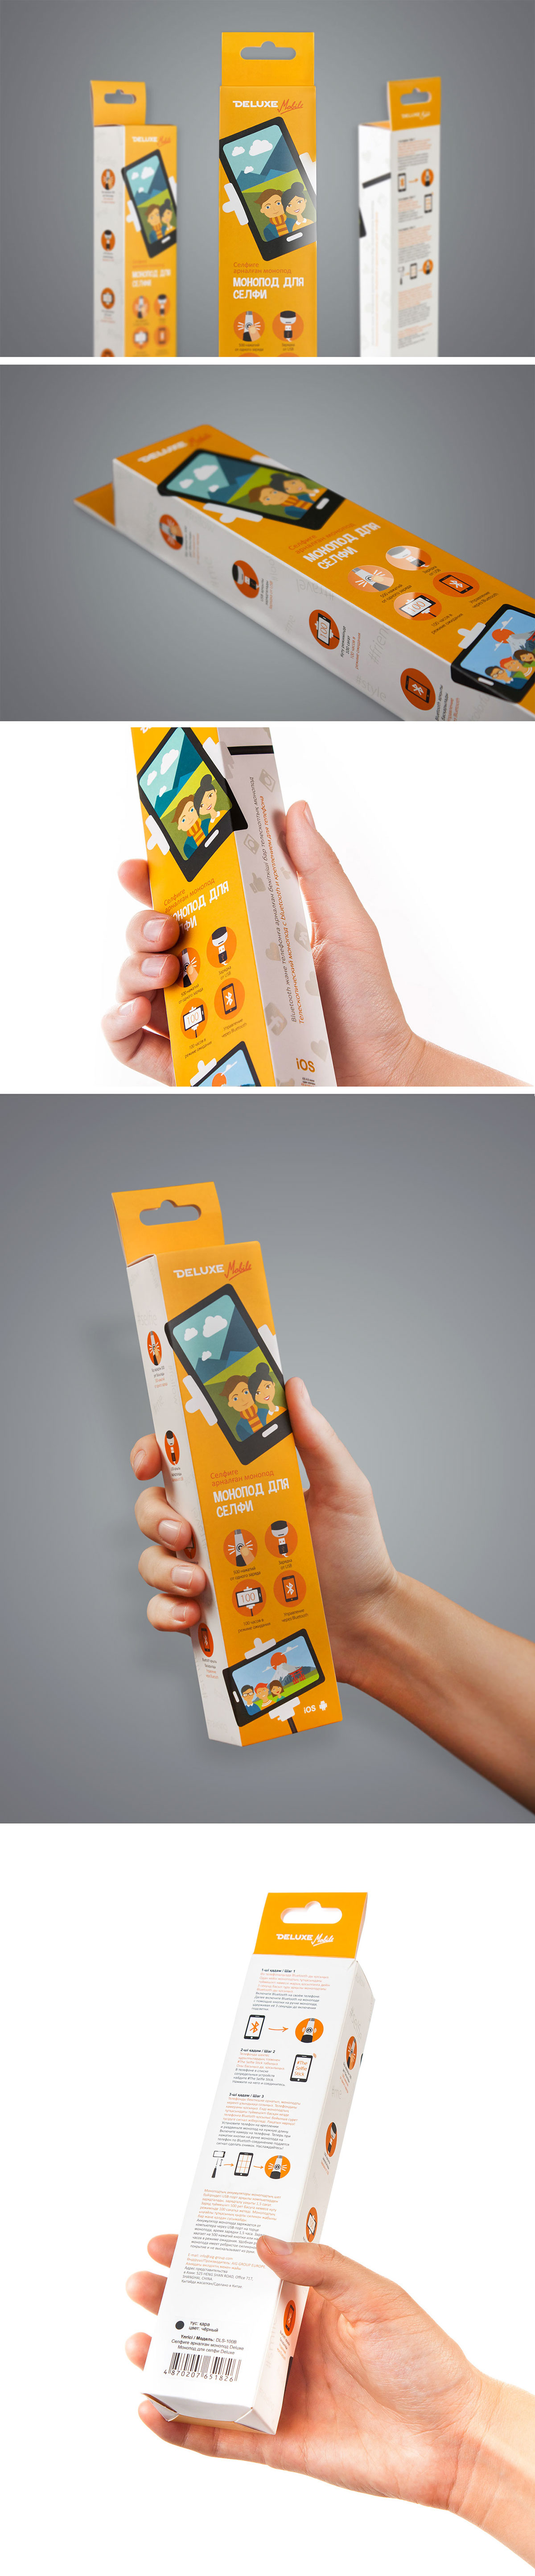 selfie monopod Pack orange flat mobile almaty kazakhstan Селфи монопод stick